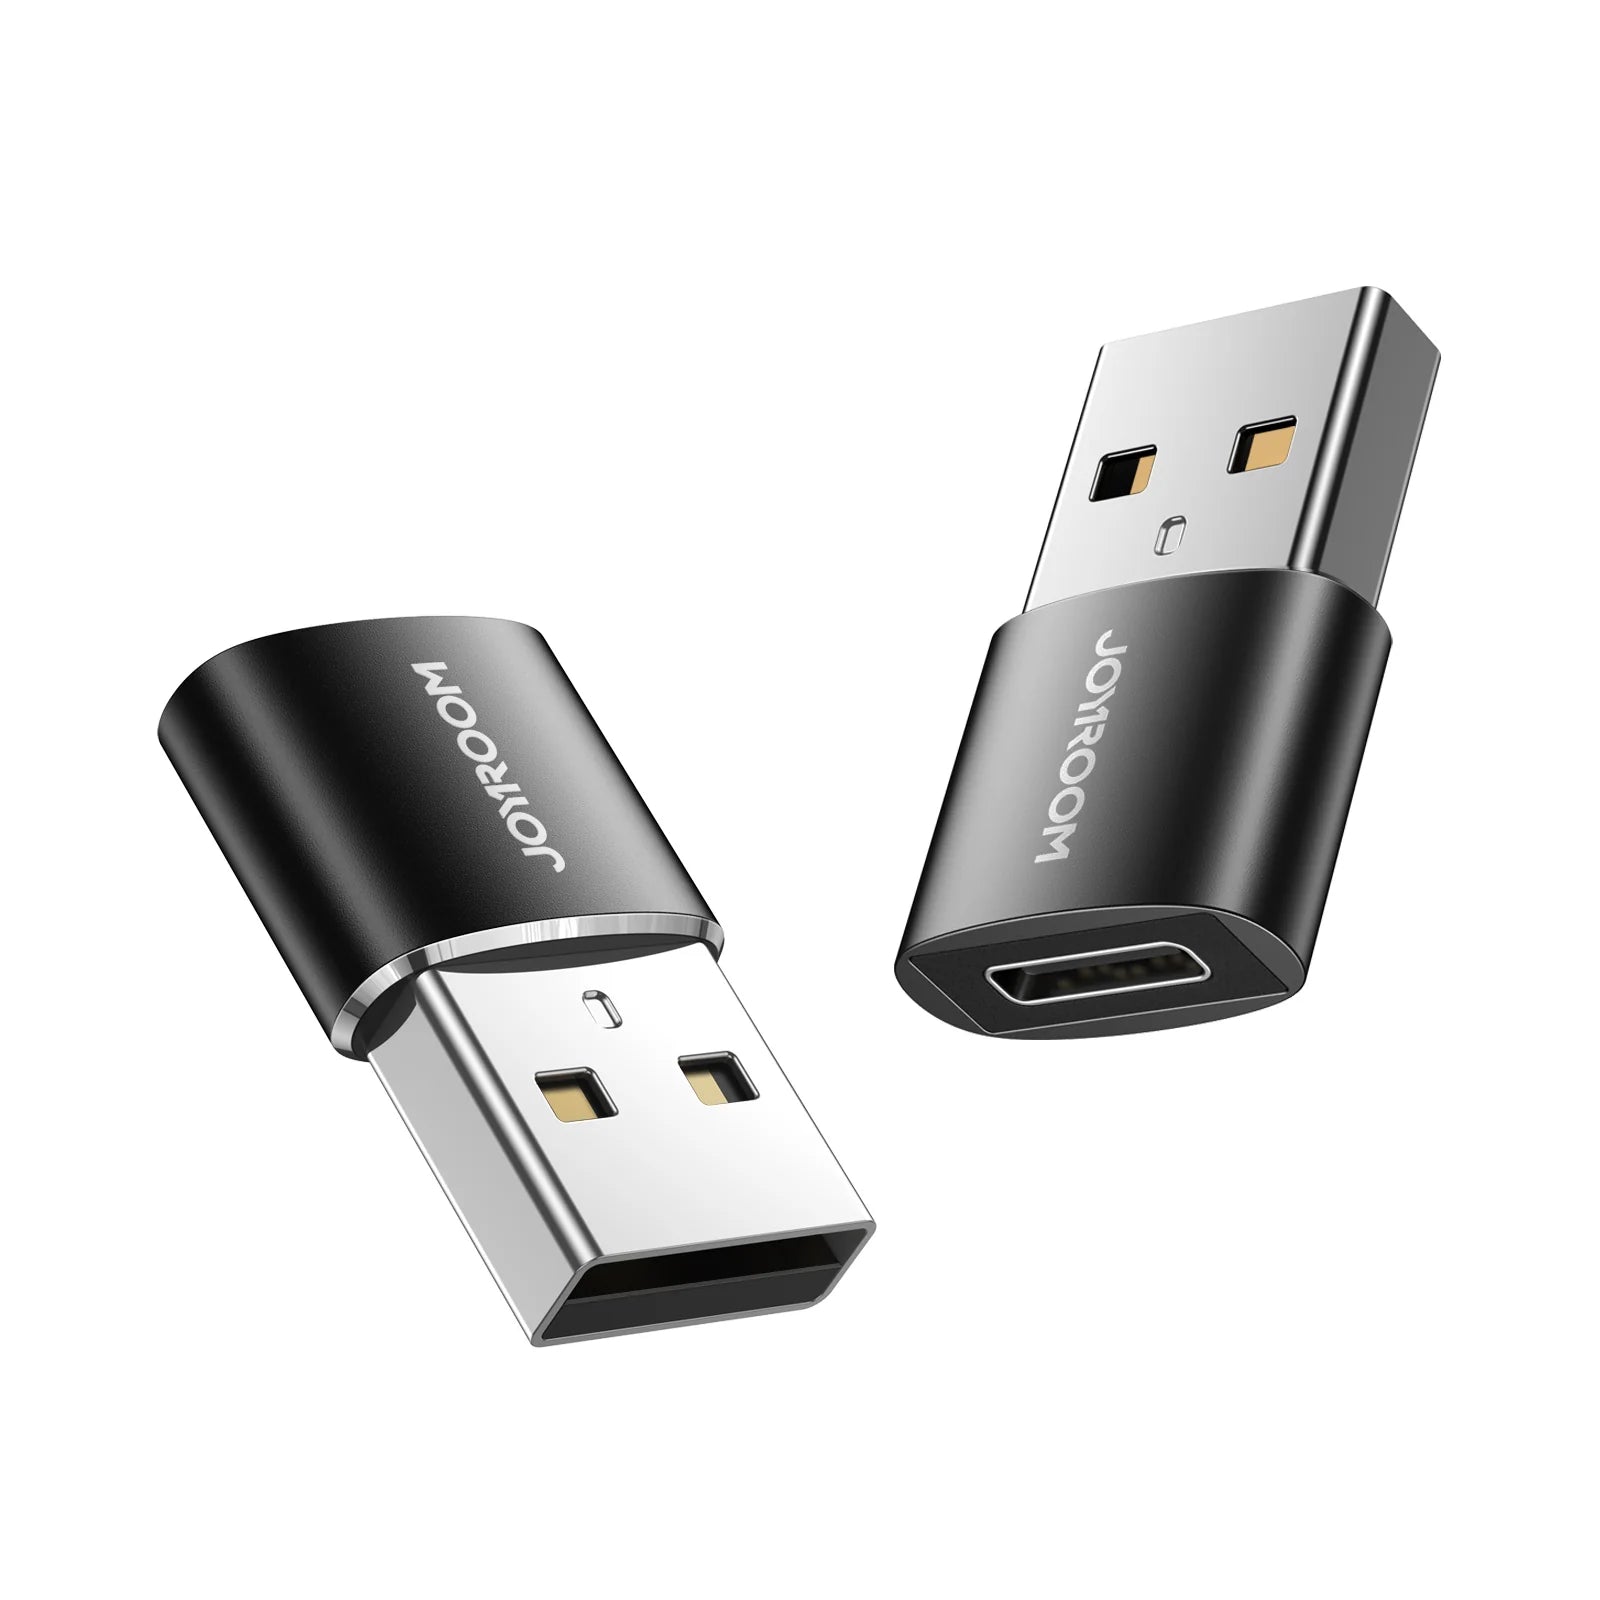 Joyroom USB to USB-C Adapter - Black